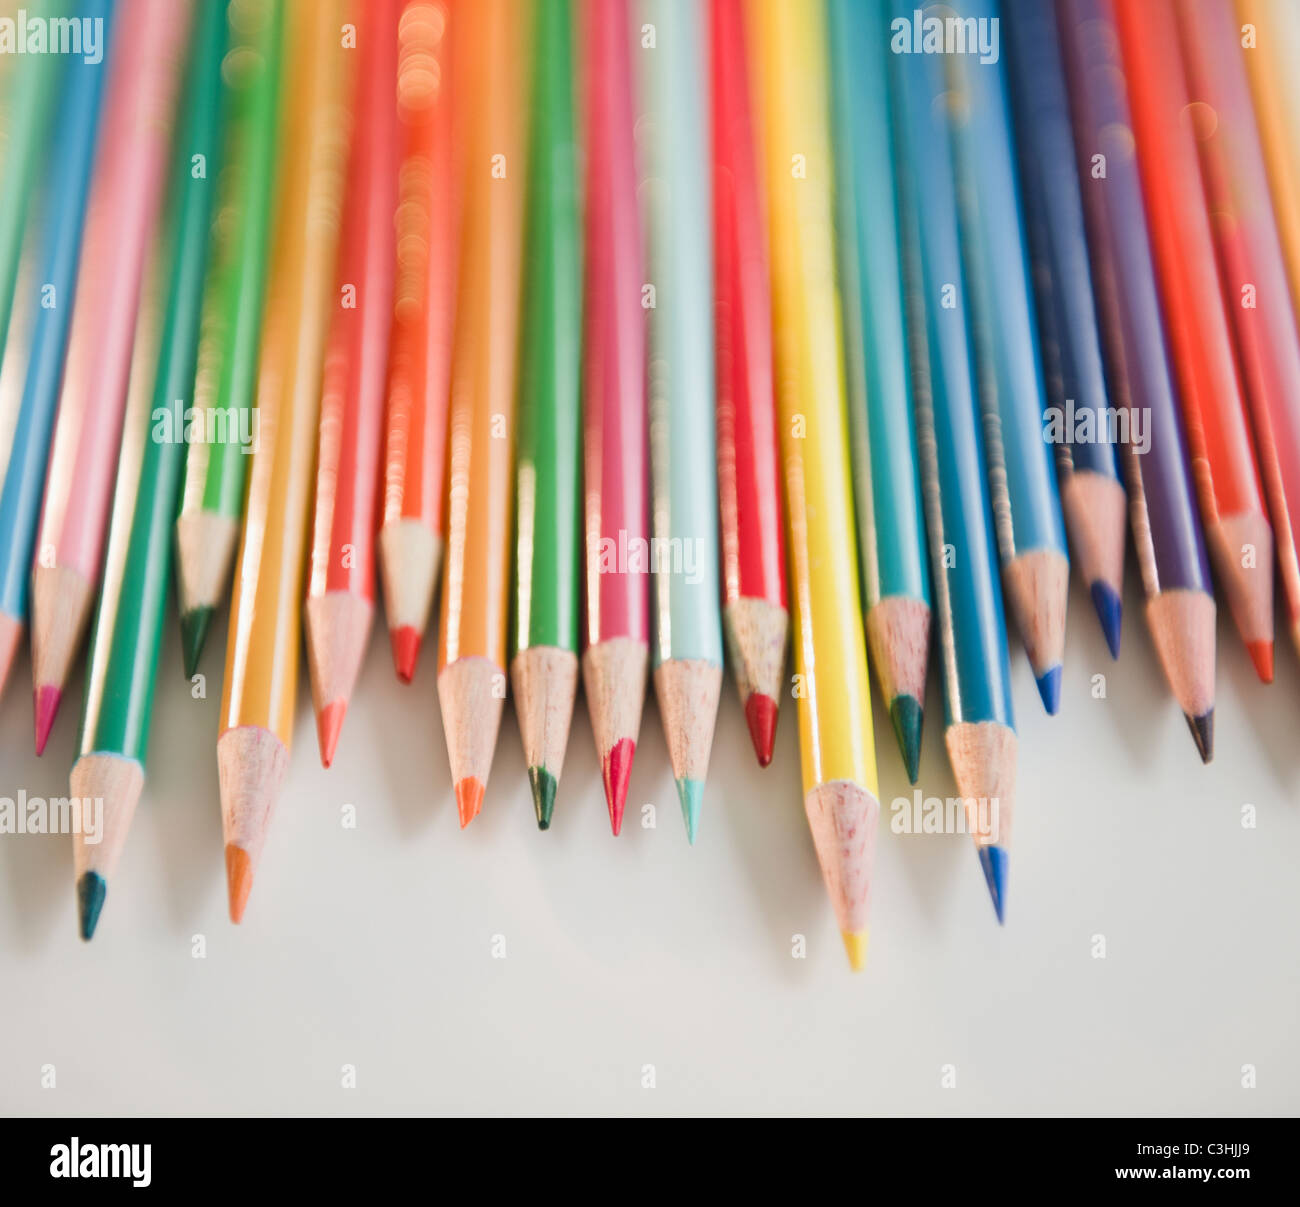 Studio shot of colored pencils in row Stock Photo - Alamy